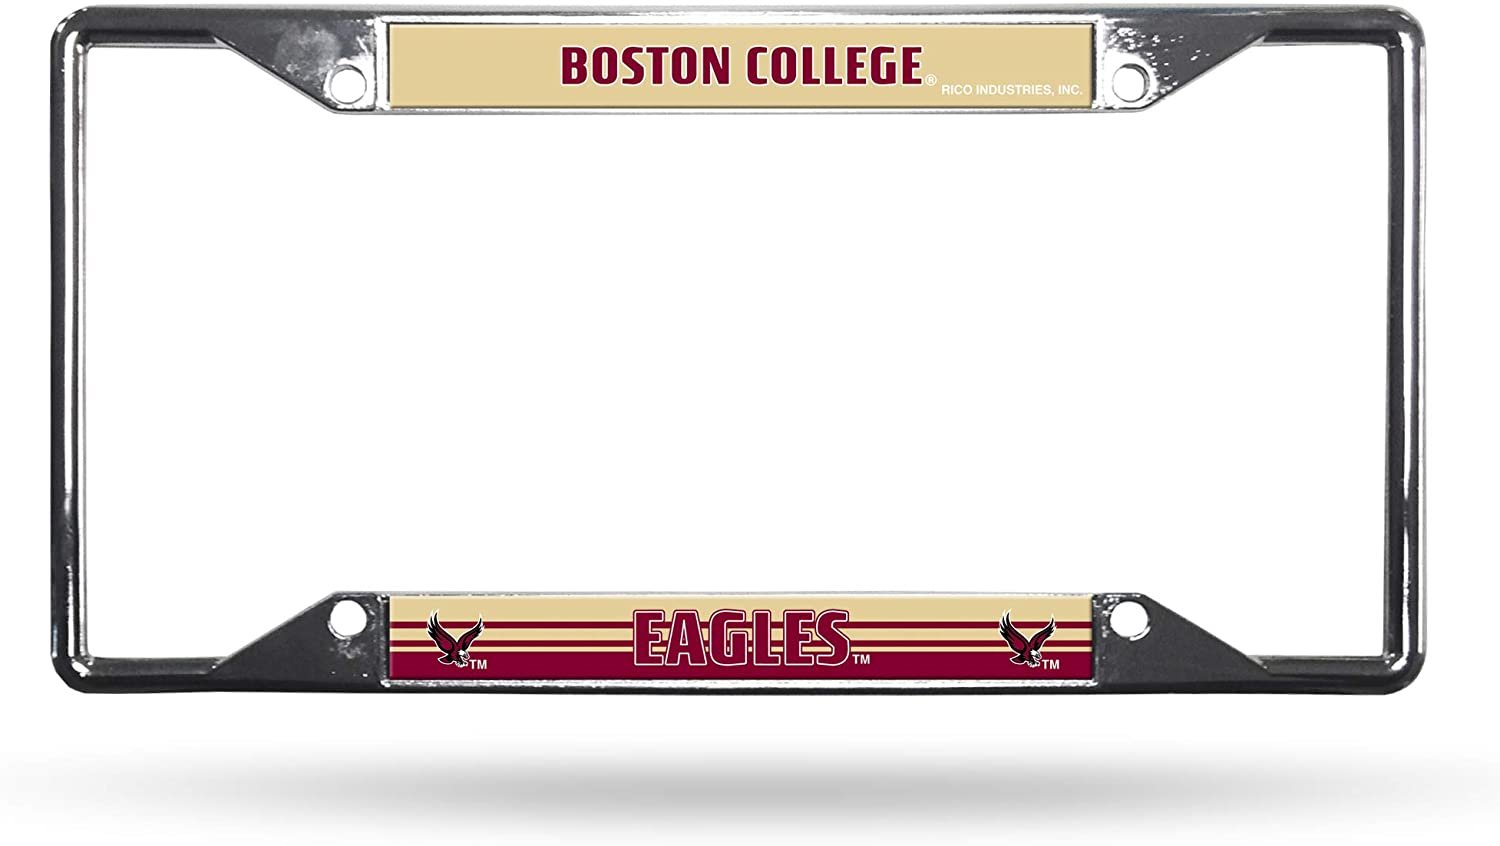 Boston College Eagles Metal License Plate Frame Chrome Tag Cover 6x12 Inch EZ View Design